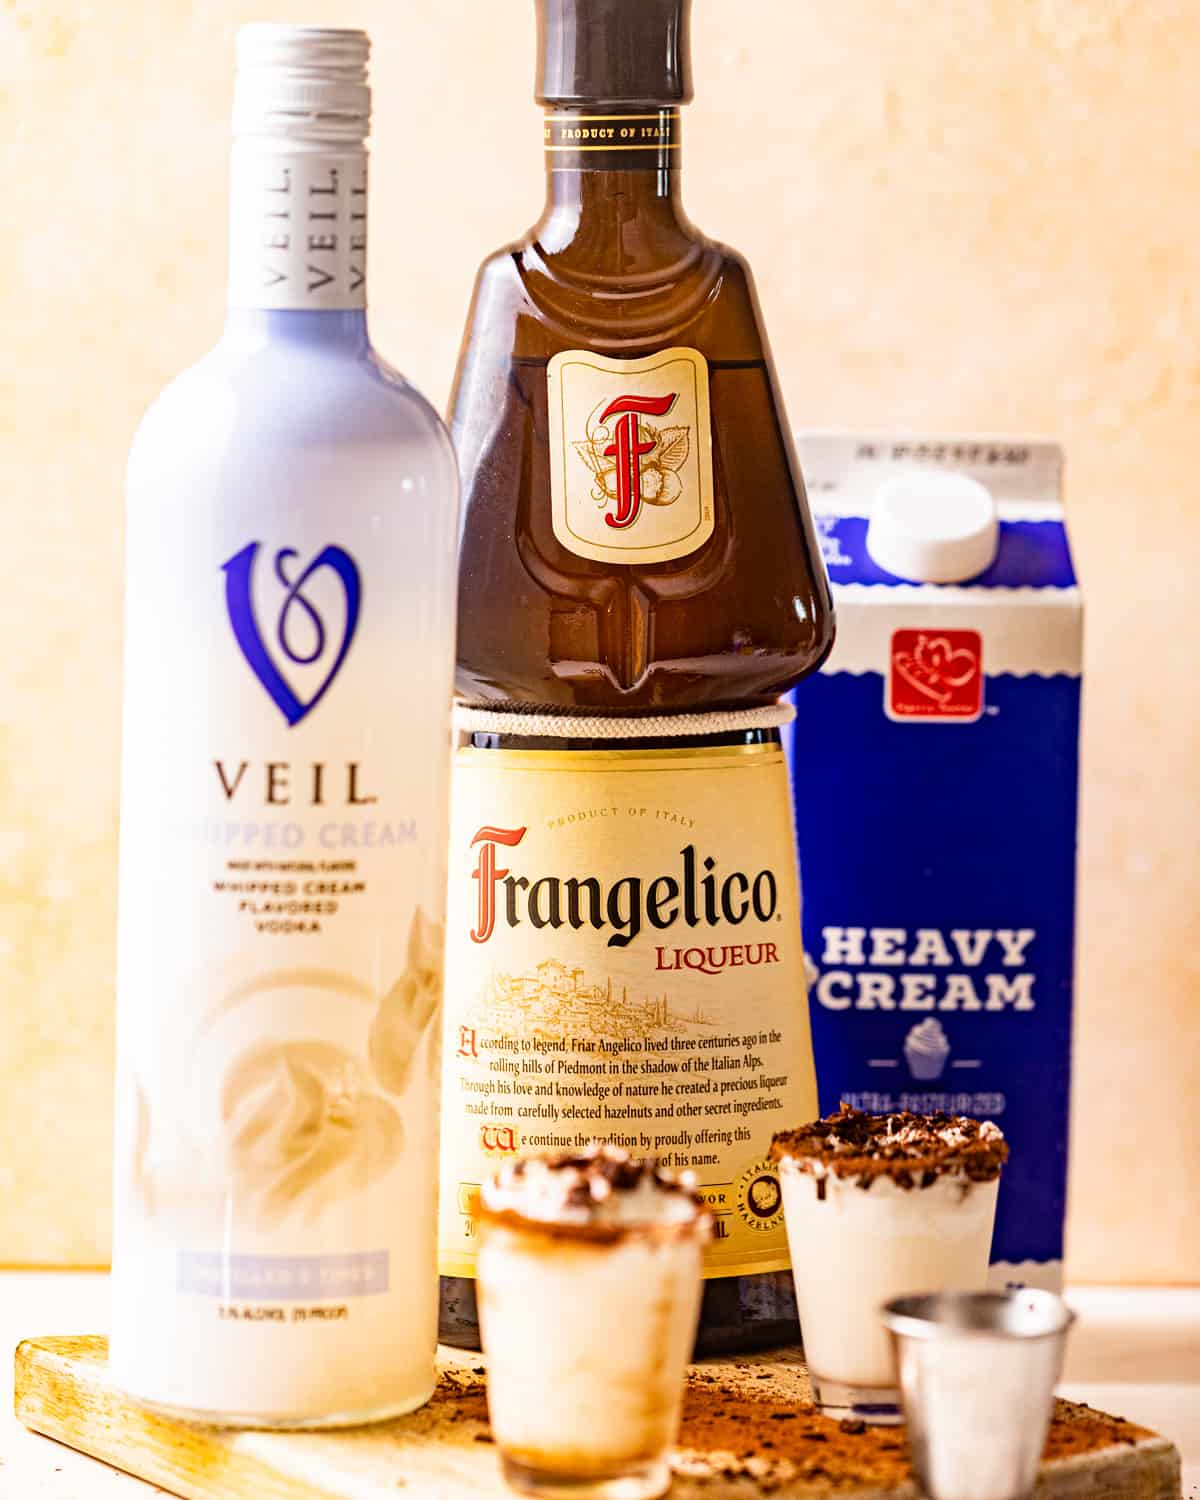 ingredients to make a chocolate cake shot - vodka, hazelnut liqueur, and heavy cream.